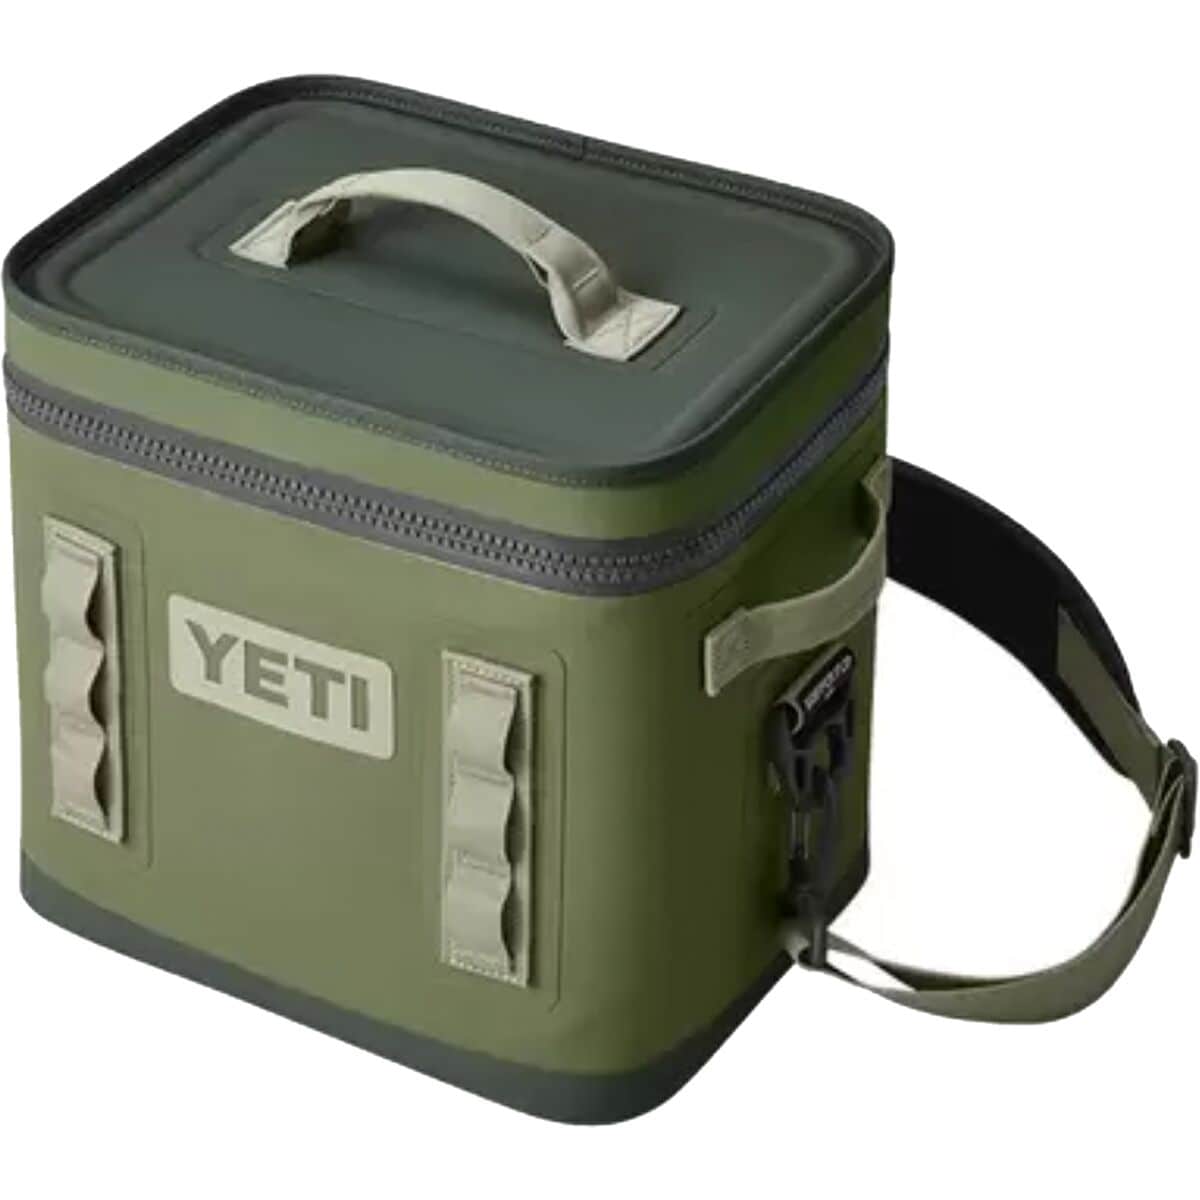 YETI Hopper Flip 12 Portable Cooler, Field Tan/Blaze Orange